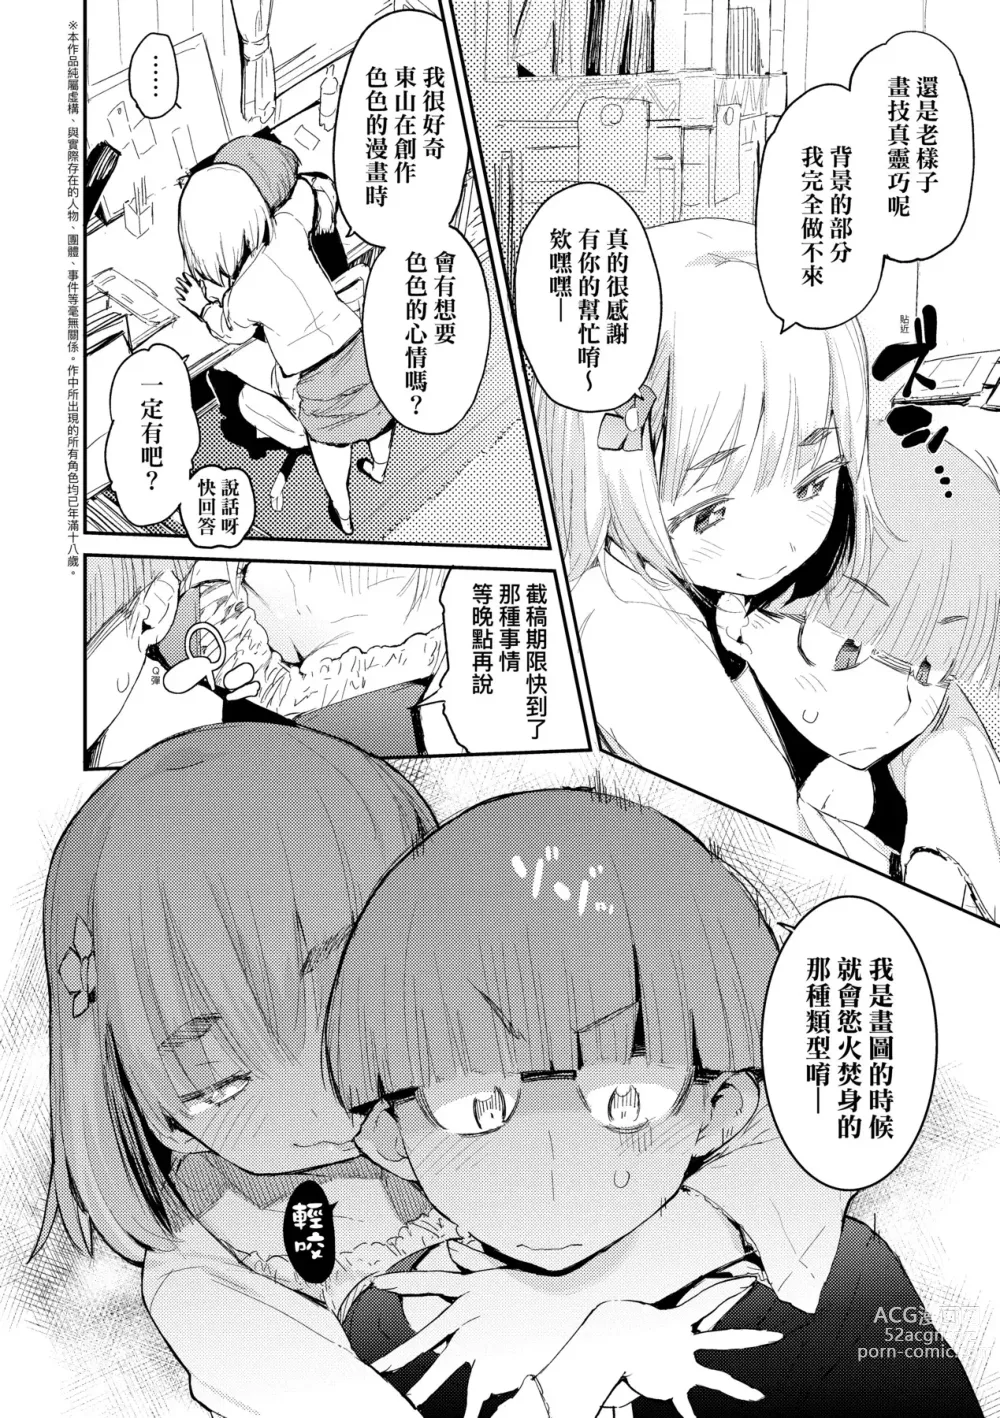 Page 31 of manga 眼眸令我陶醉 (decensored)